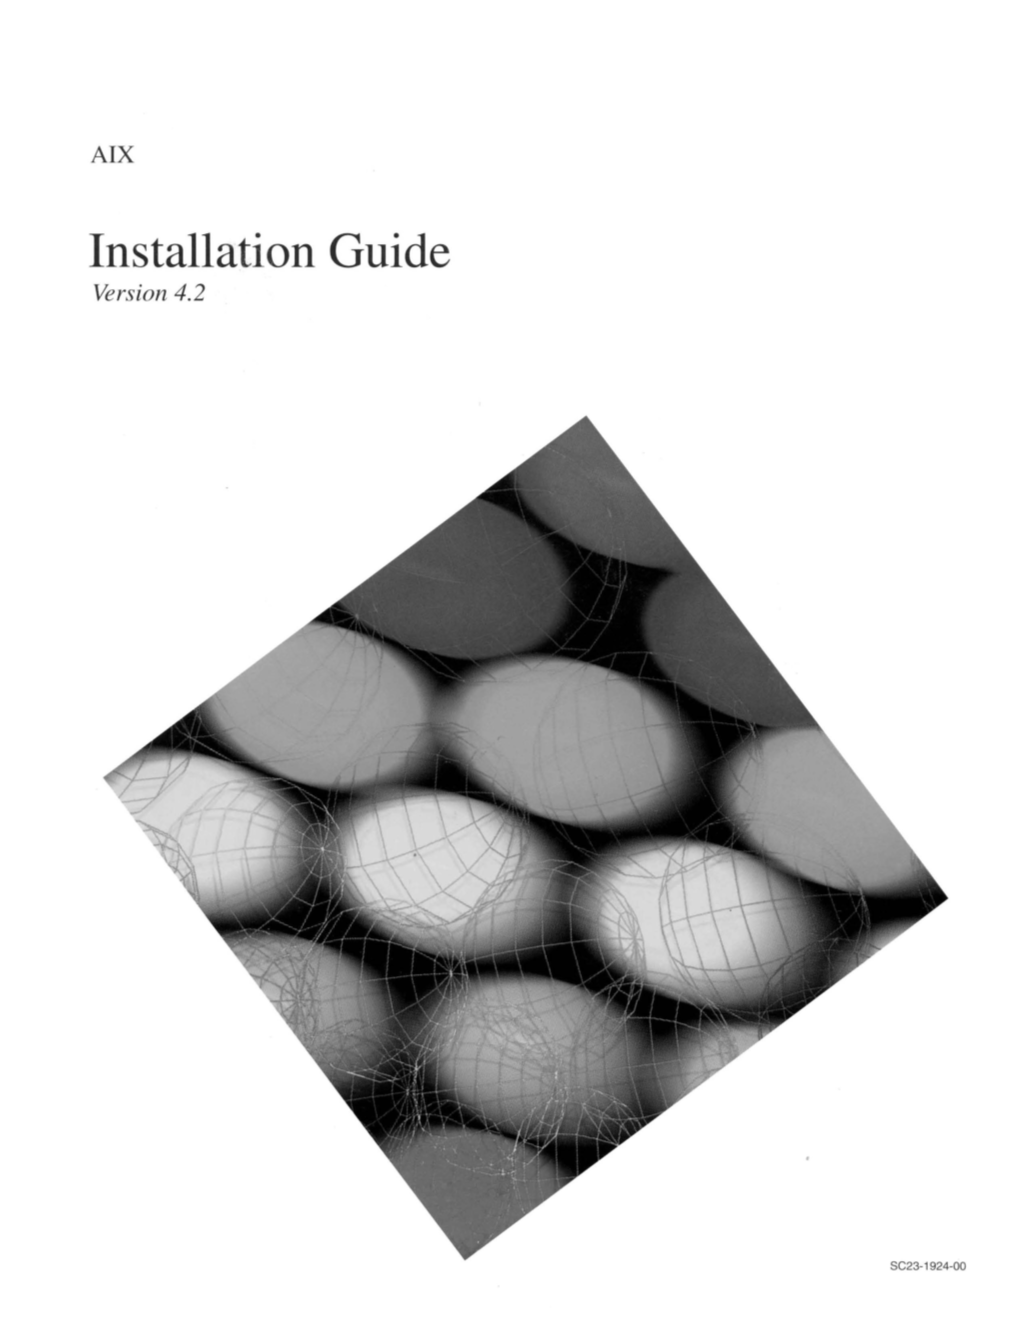 Installation Guide Version 4.2